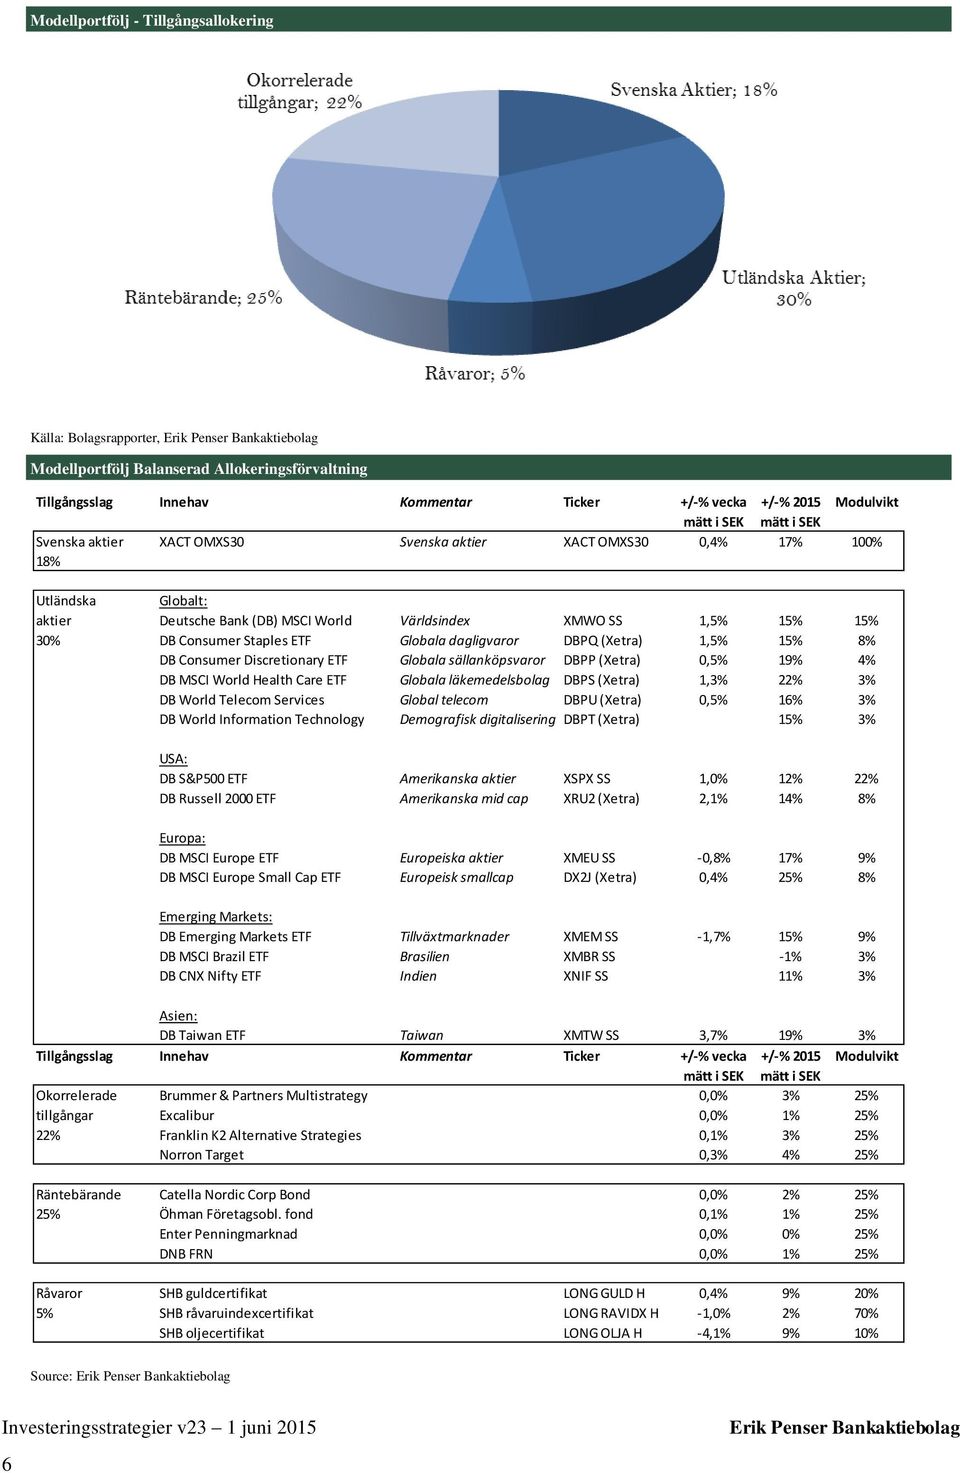 Consumer Staples ETF Globala dagligvaror DBPQ (Xetra) 1,5% 15% 8% DB Consumer Discretionary ETF Globala sällanköpsvaror DBPP (Xetra) 0,5% 19% 4% DB MSCI World Health Care ETF Globala läkemedelsbolag